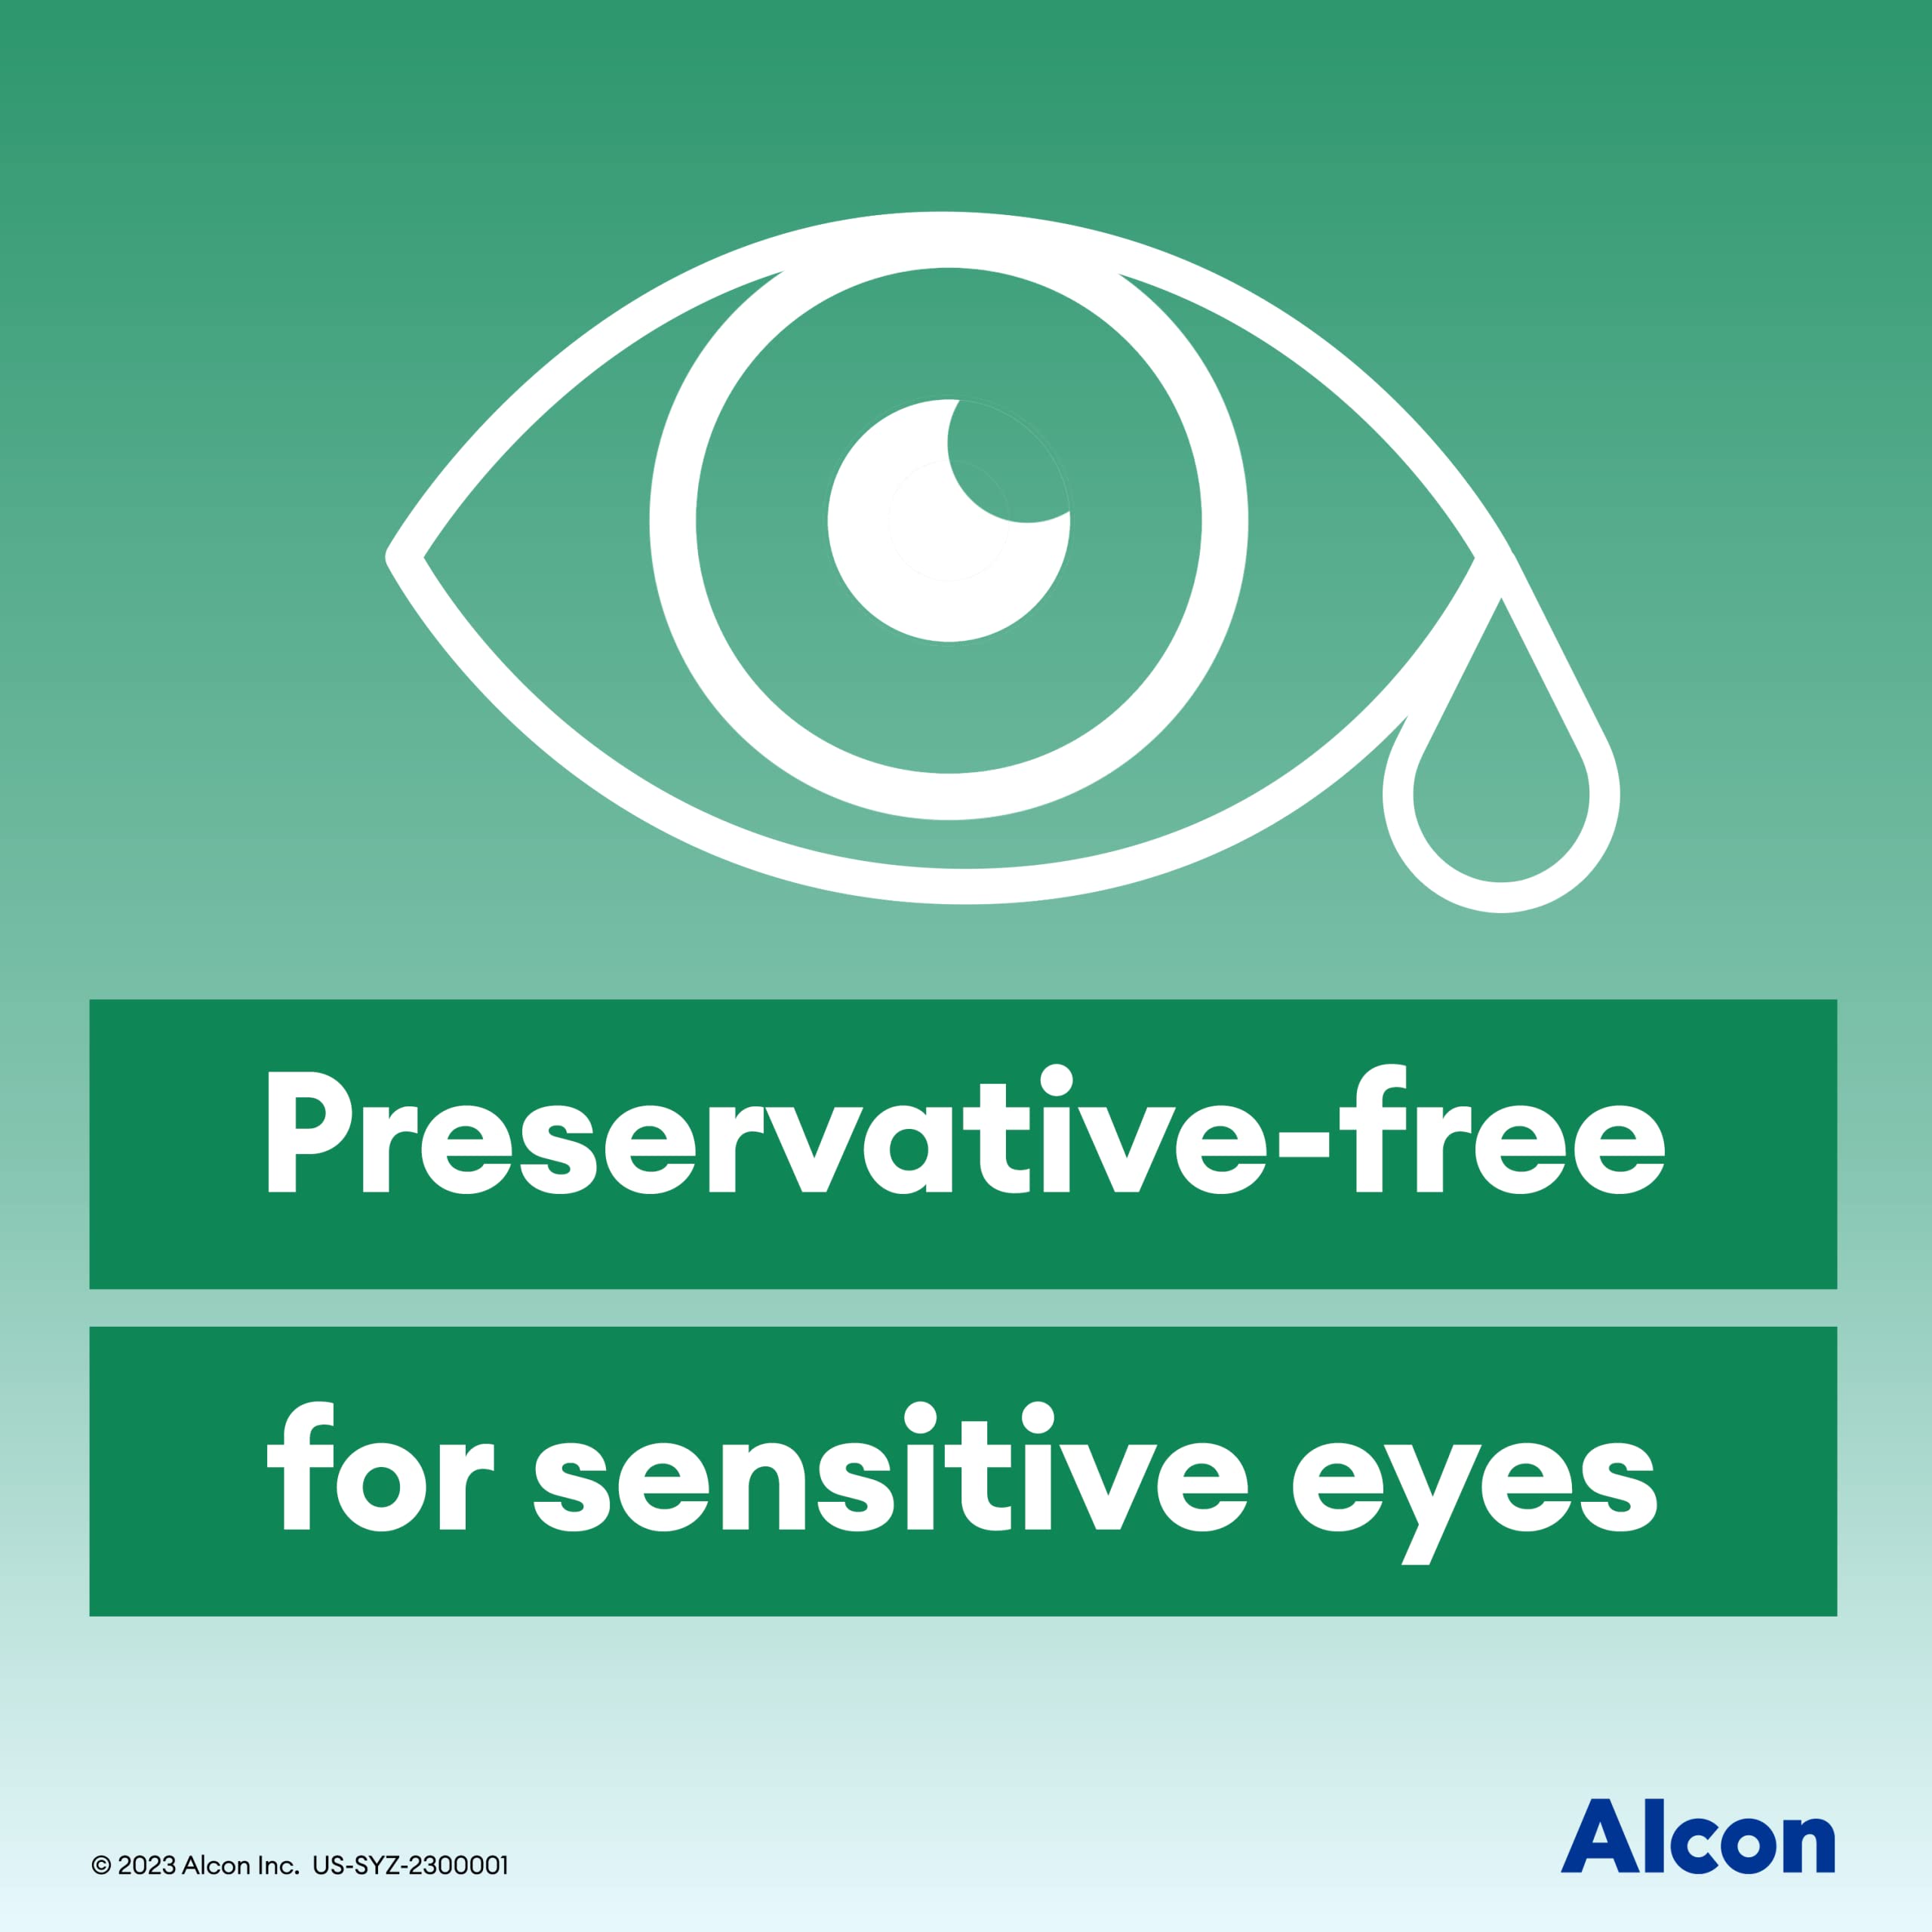 Systane Ultra Preservative-Free Eye Drops 10ml